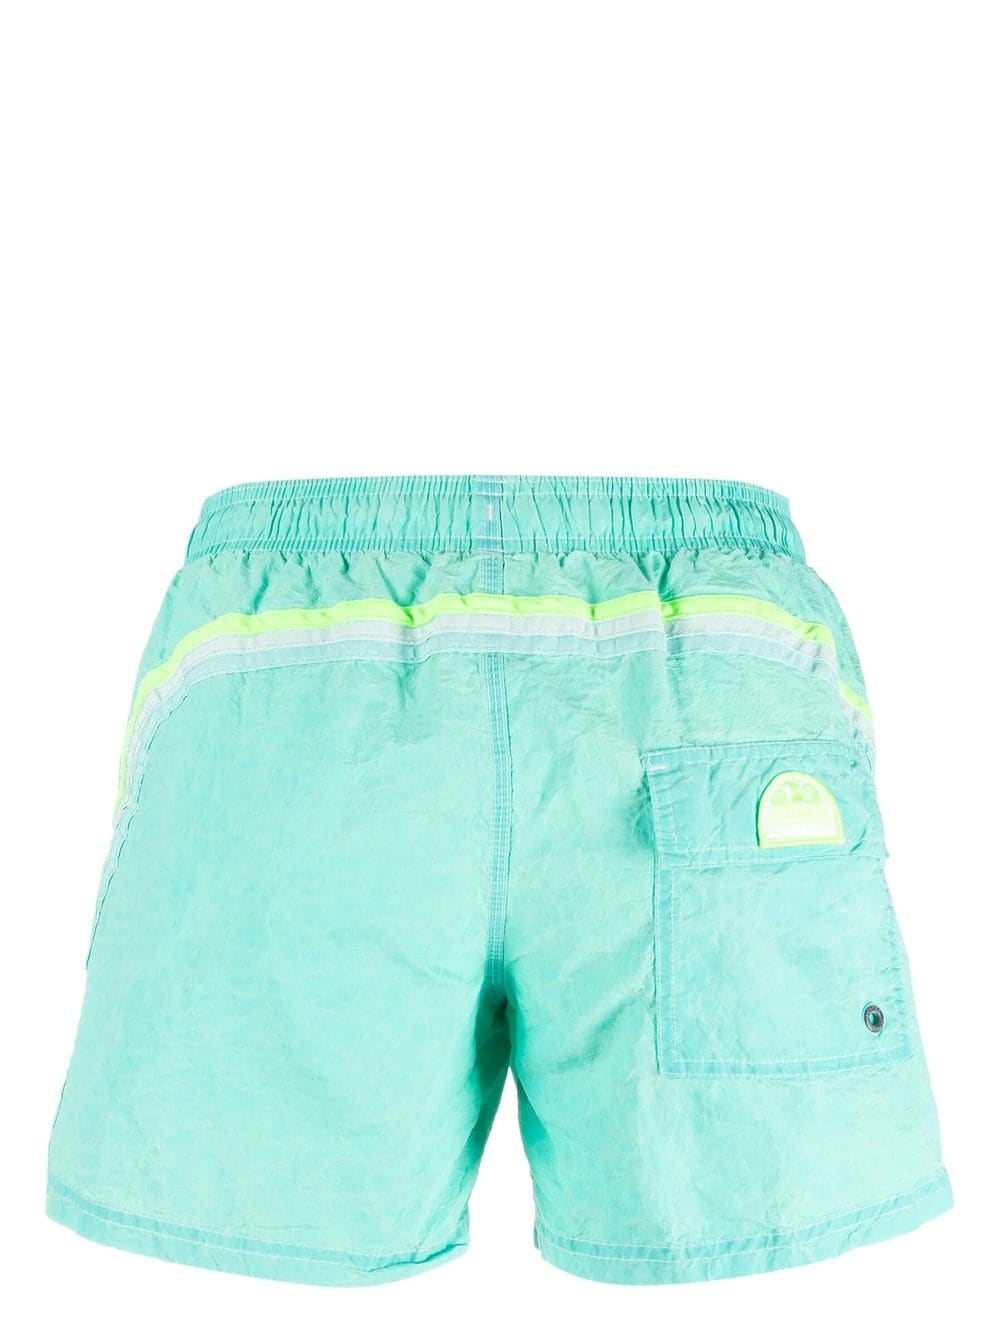 Light blue plaid swim shorts